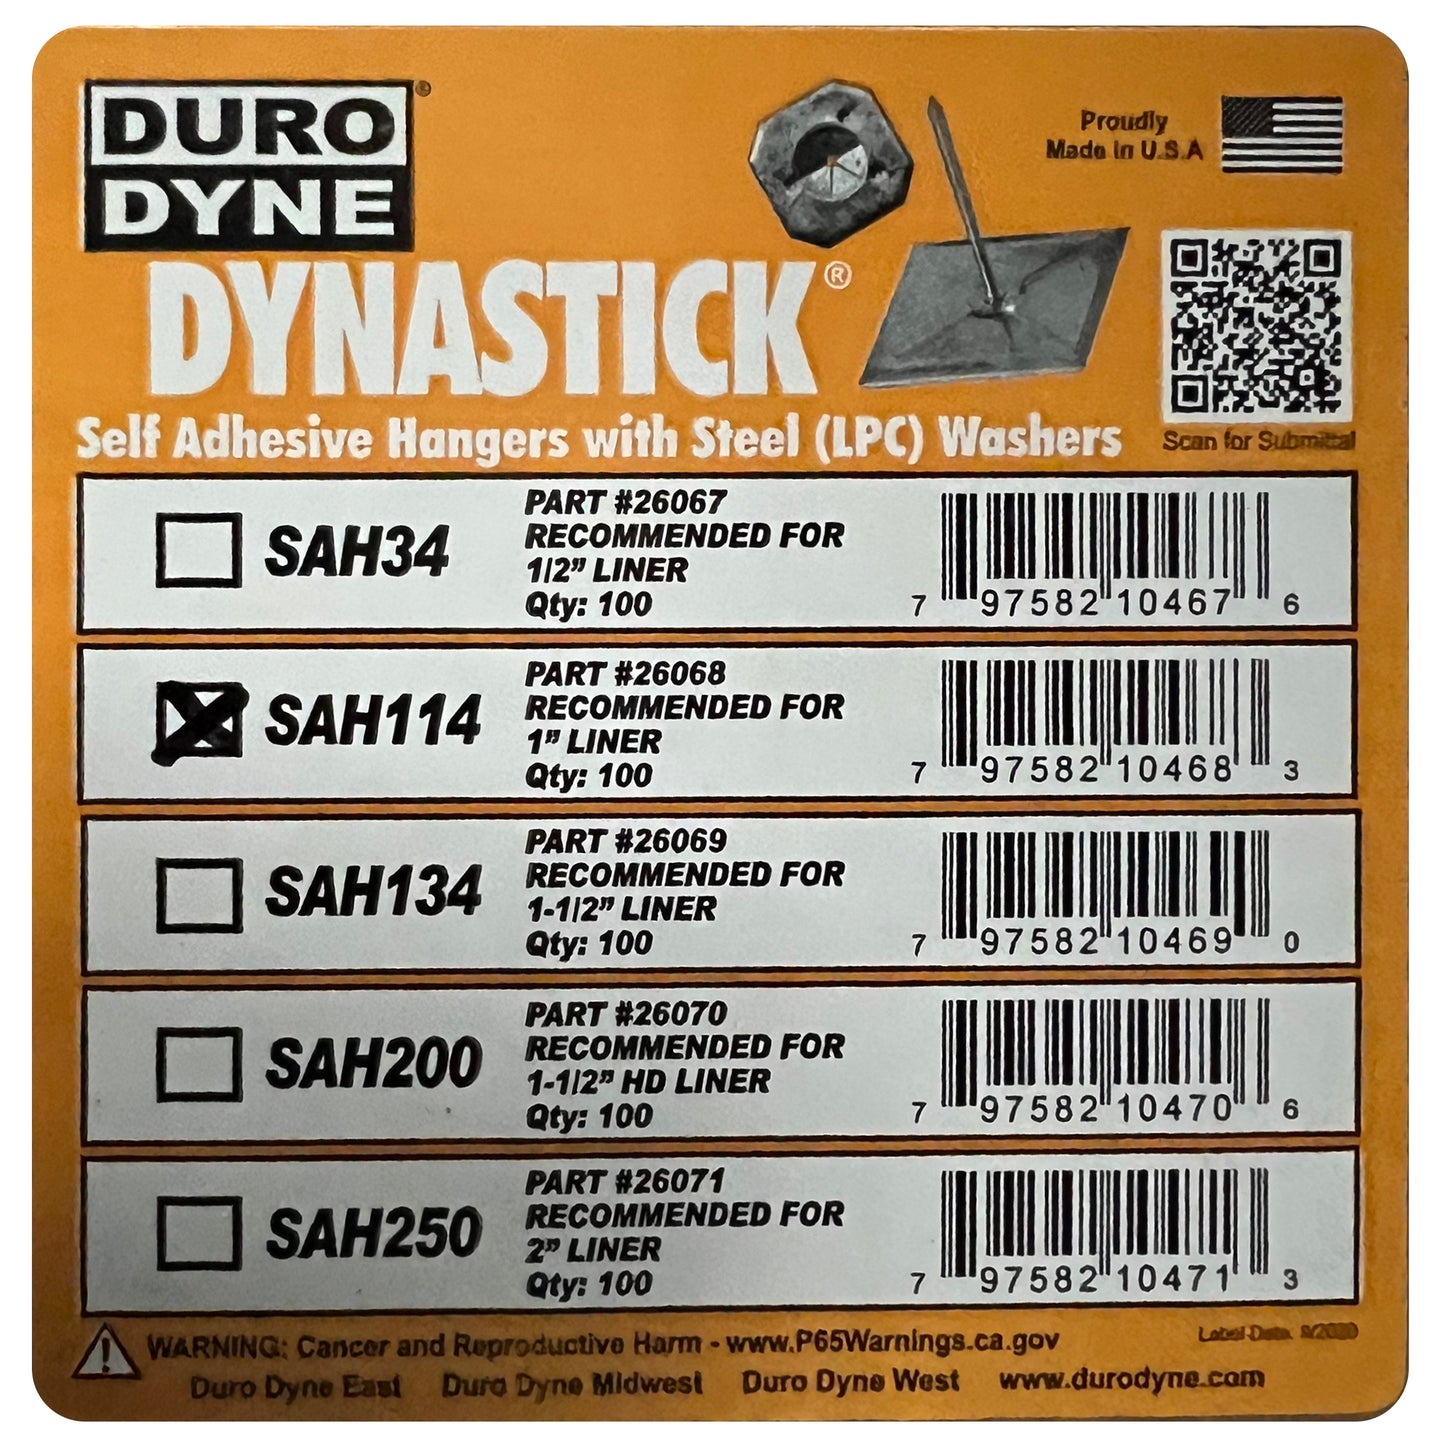 Box of 100 Duro Dyne 1-1/4" Dynastick Self Adhesive Insulation Fastener Hangers